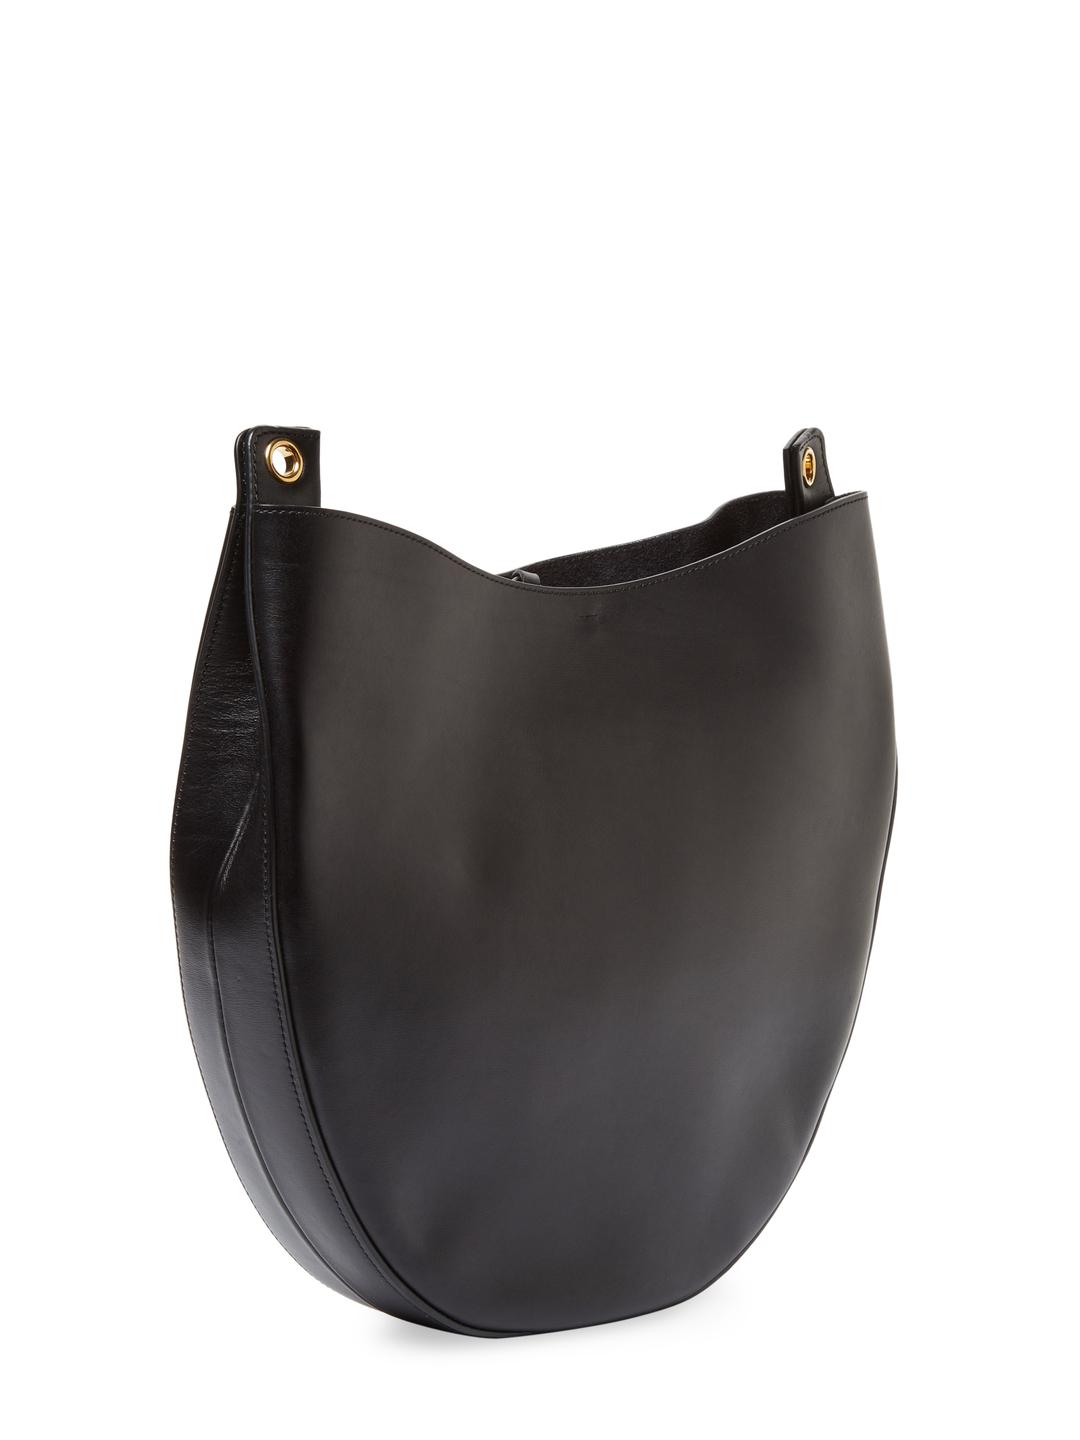 Celine Medium Calfskin Leather Hobo Bag in Black | Lyst